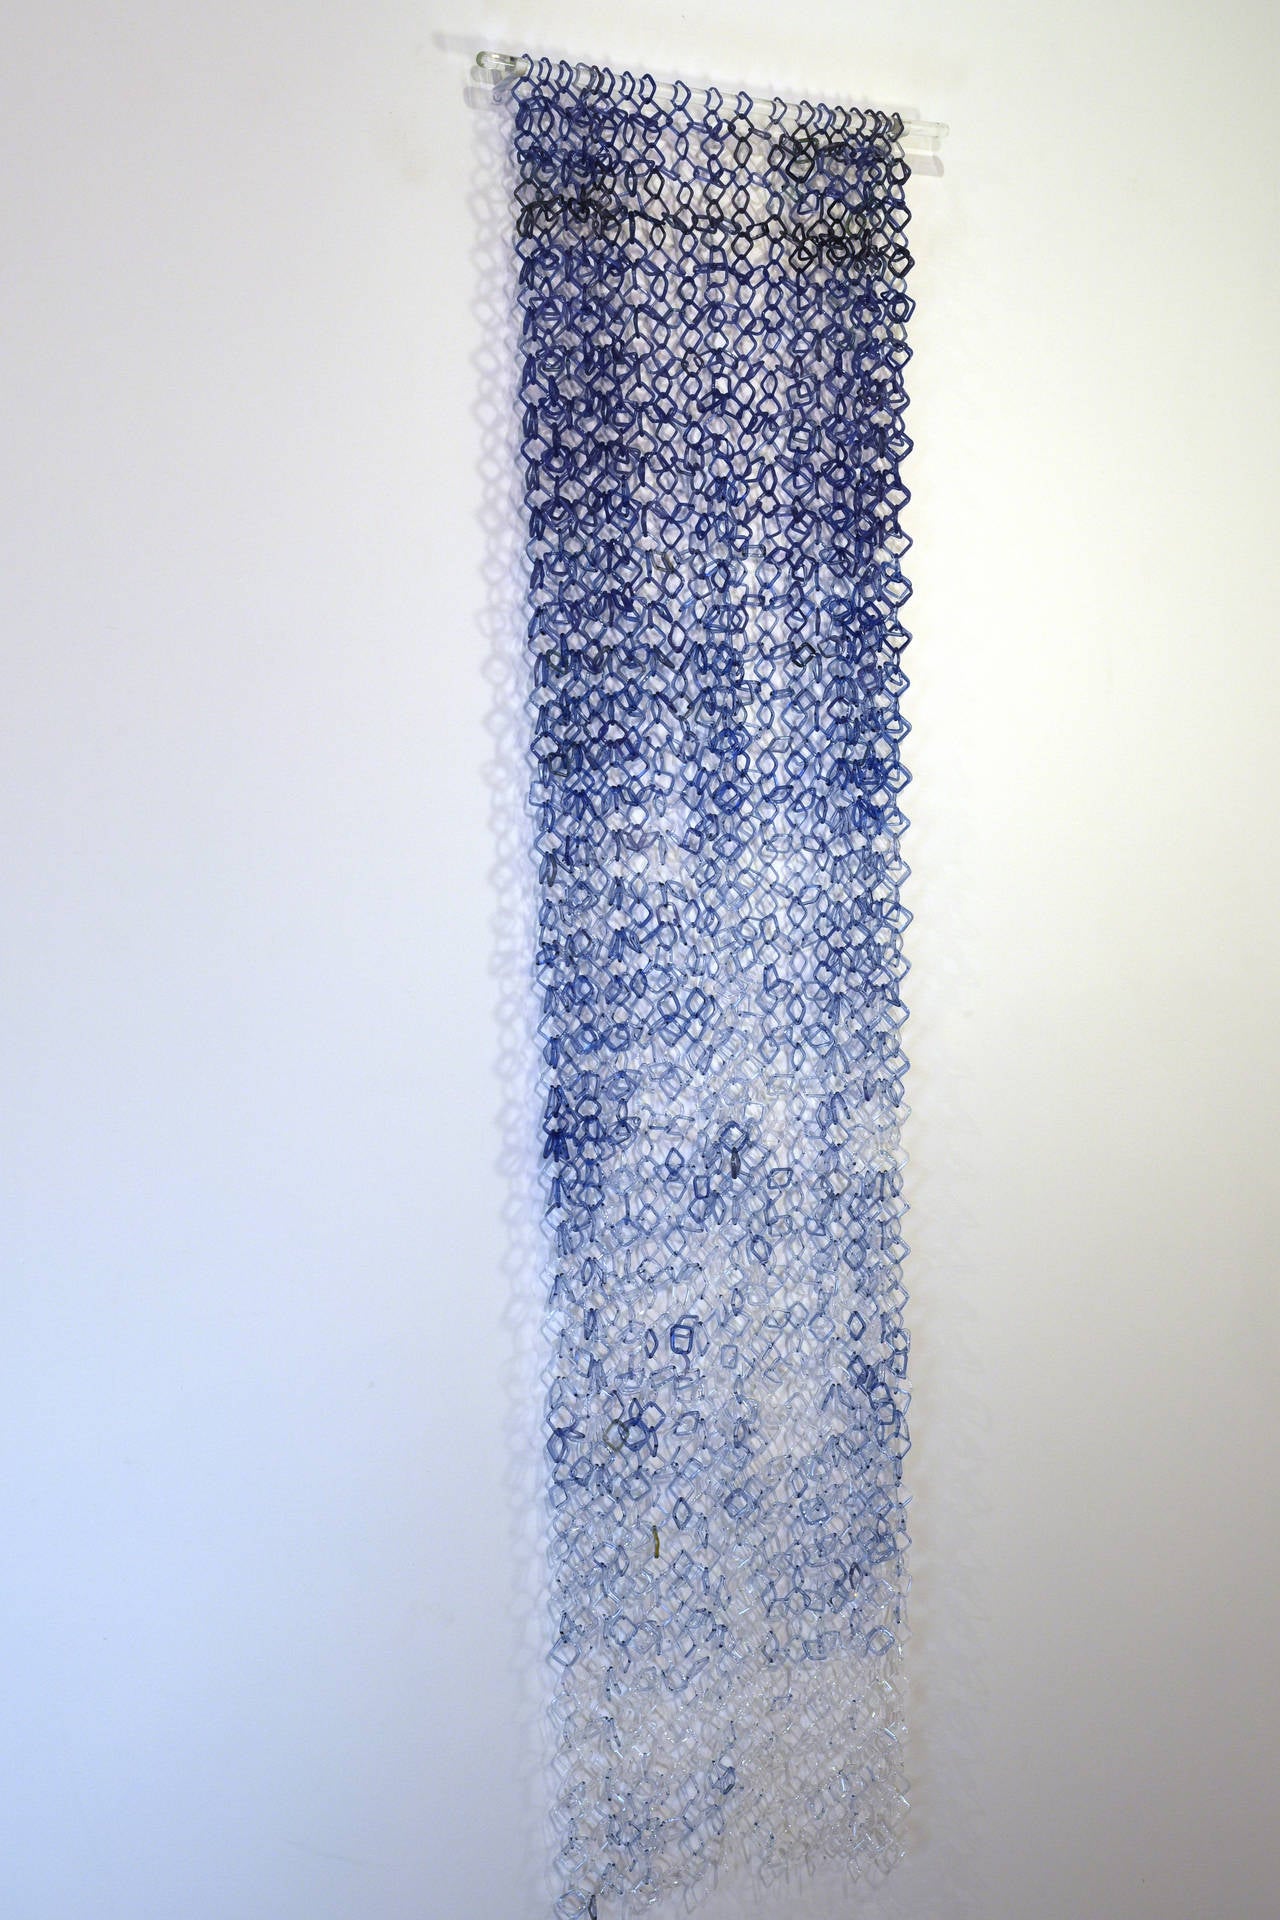 Blue Fade - Contemporary Sculpture by David Licata